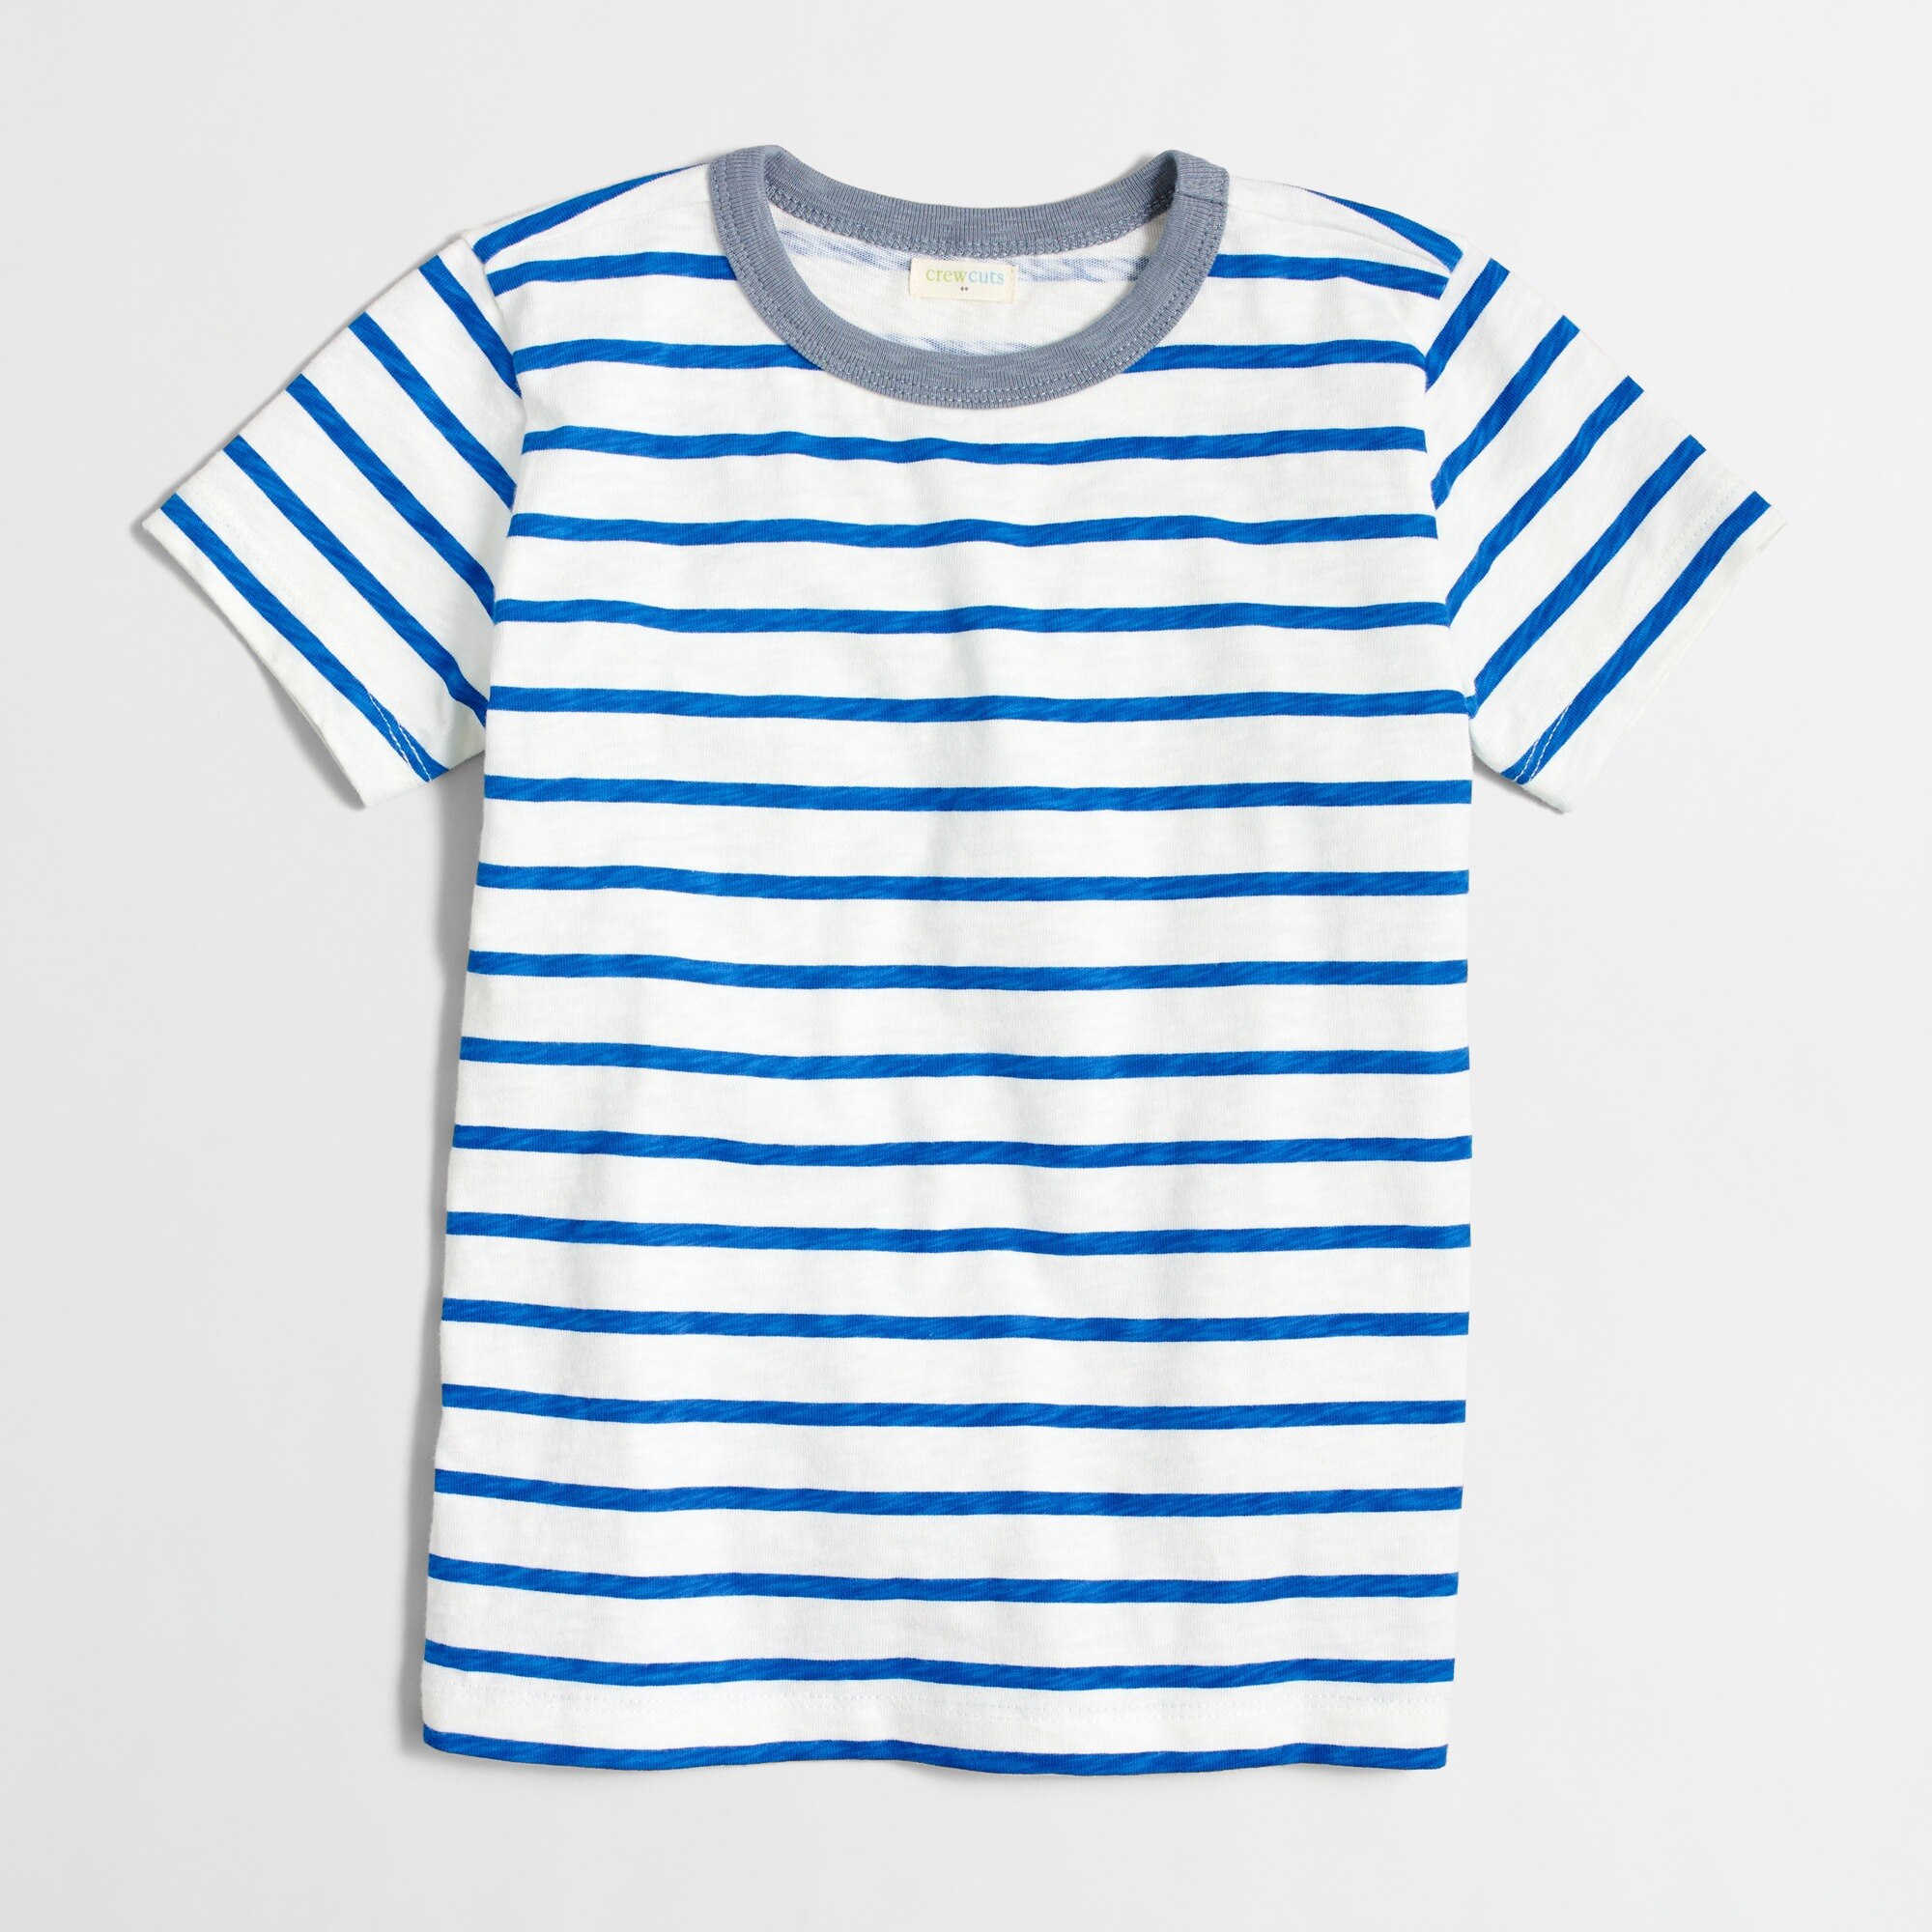 Boys' contrast ringer t-SHIRT in stripe : FactoryBoys stripes & novelty ...